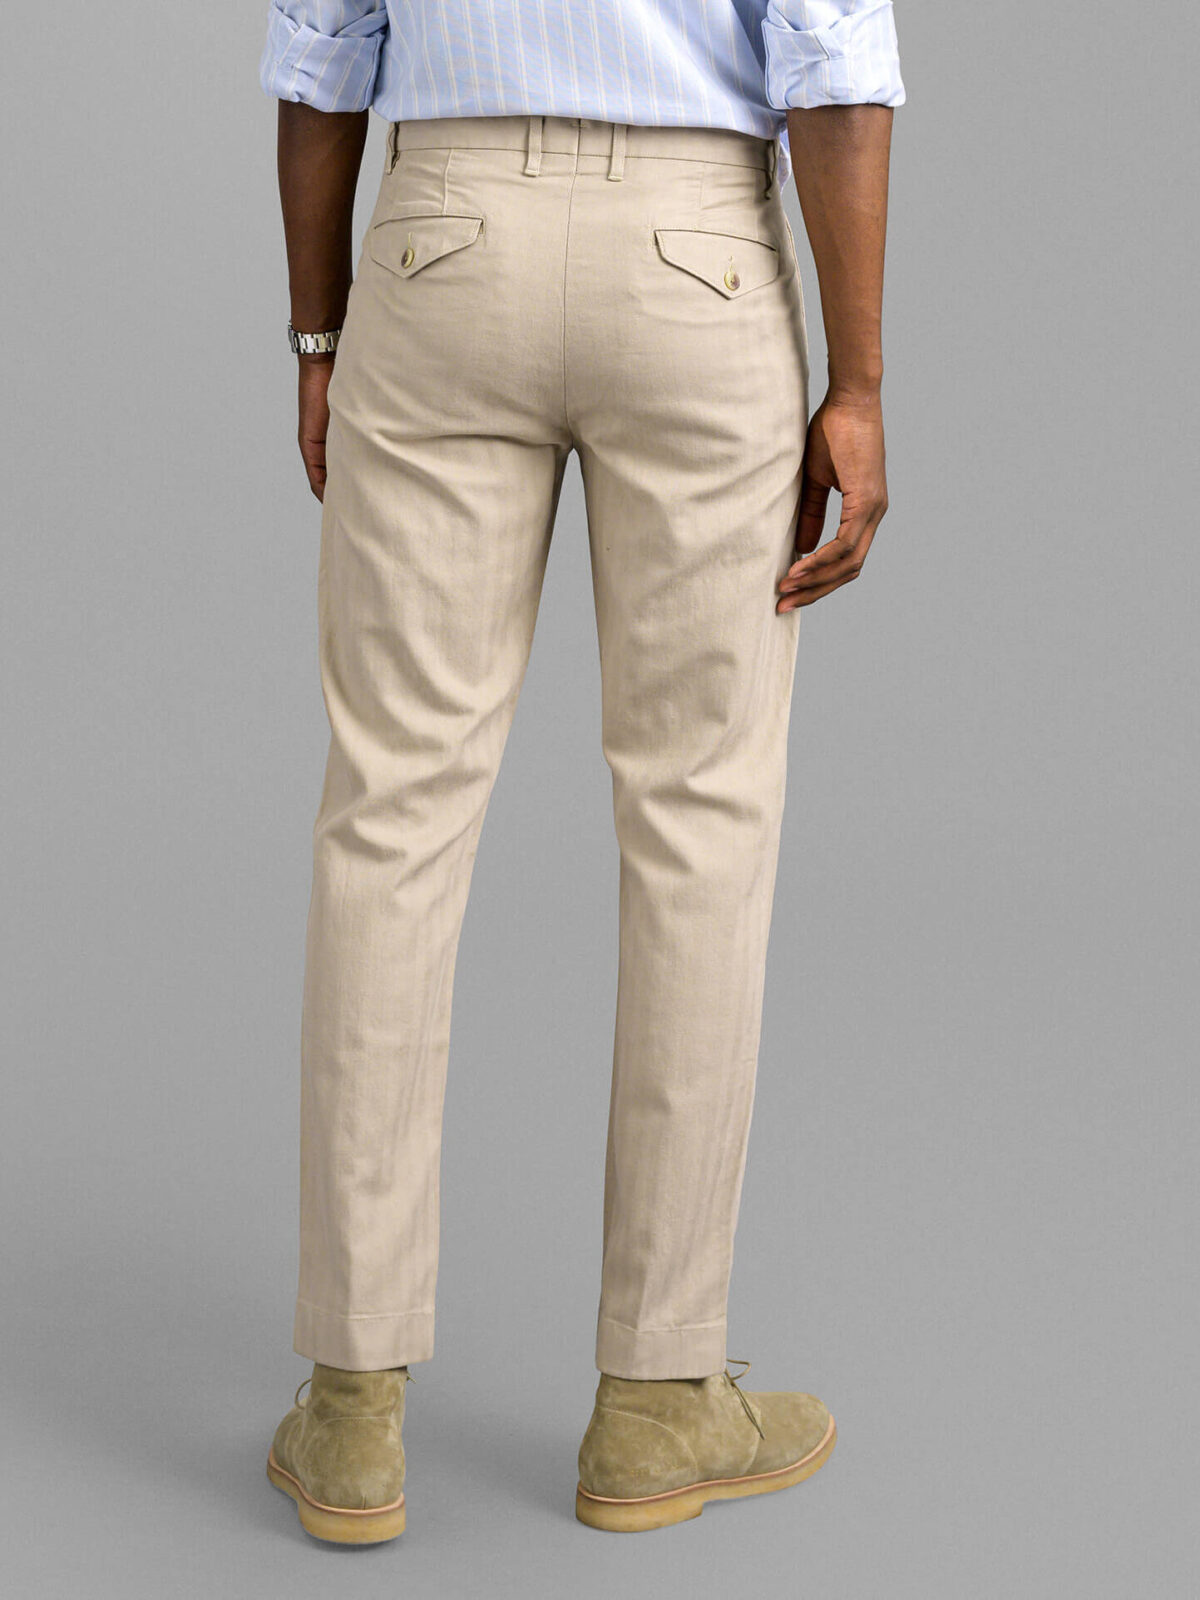 Rialto Beige Stretch Cotton Linen Herringbone Chino - Custom Fit Pants